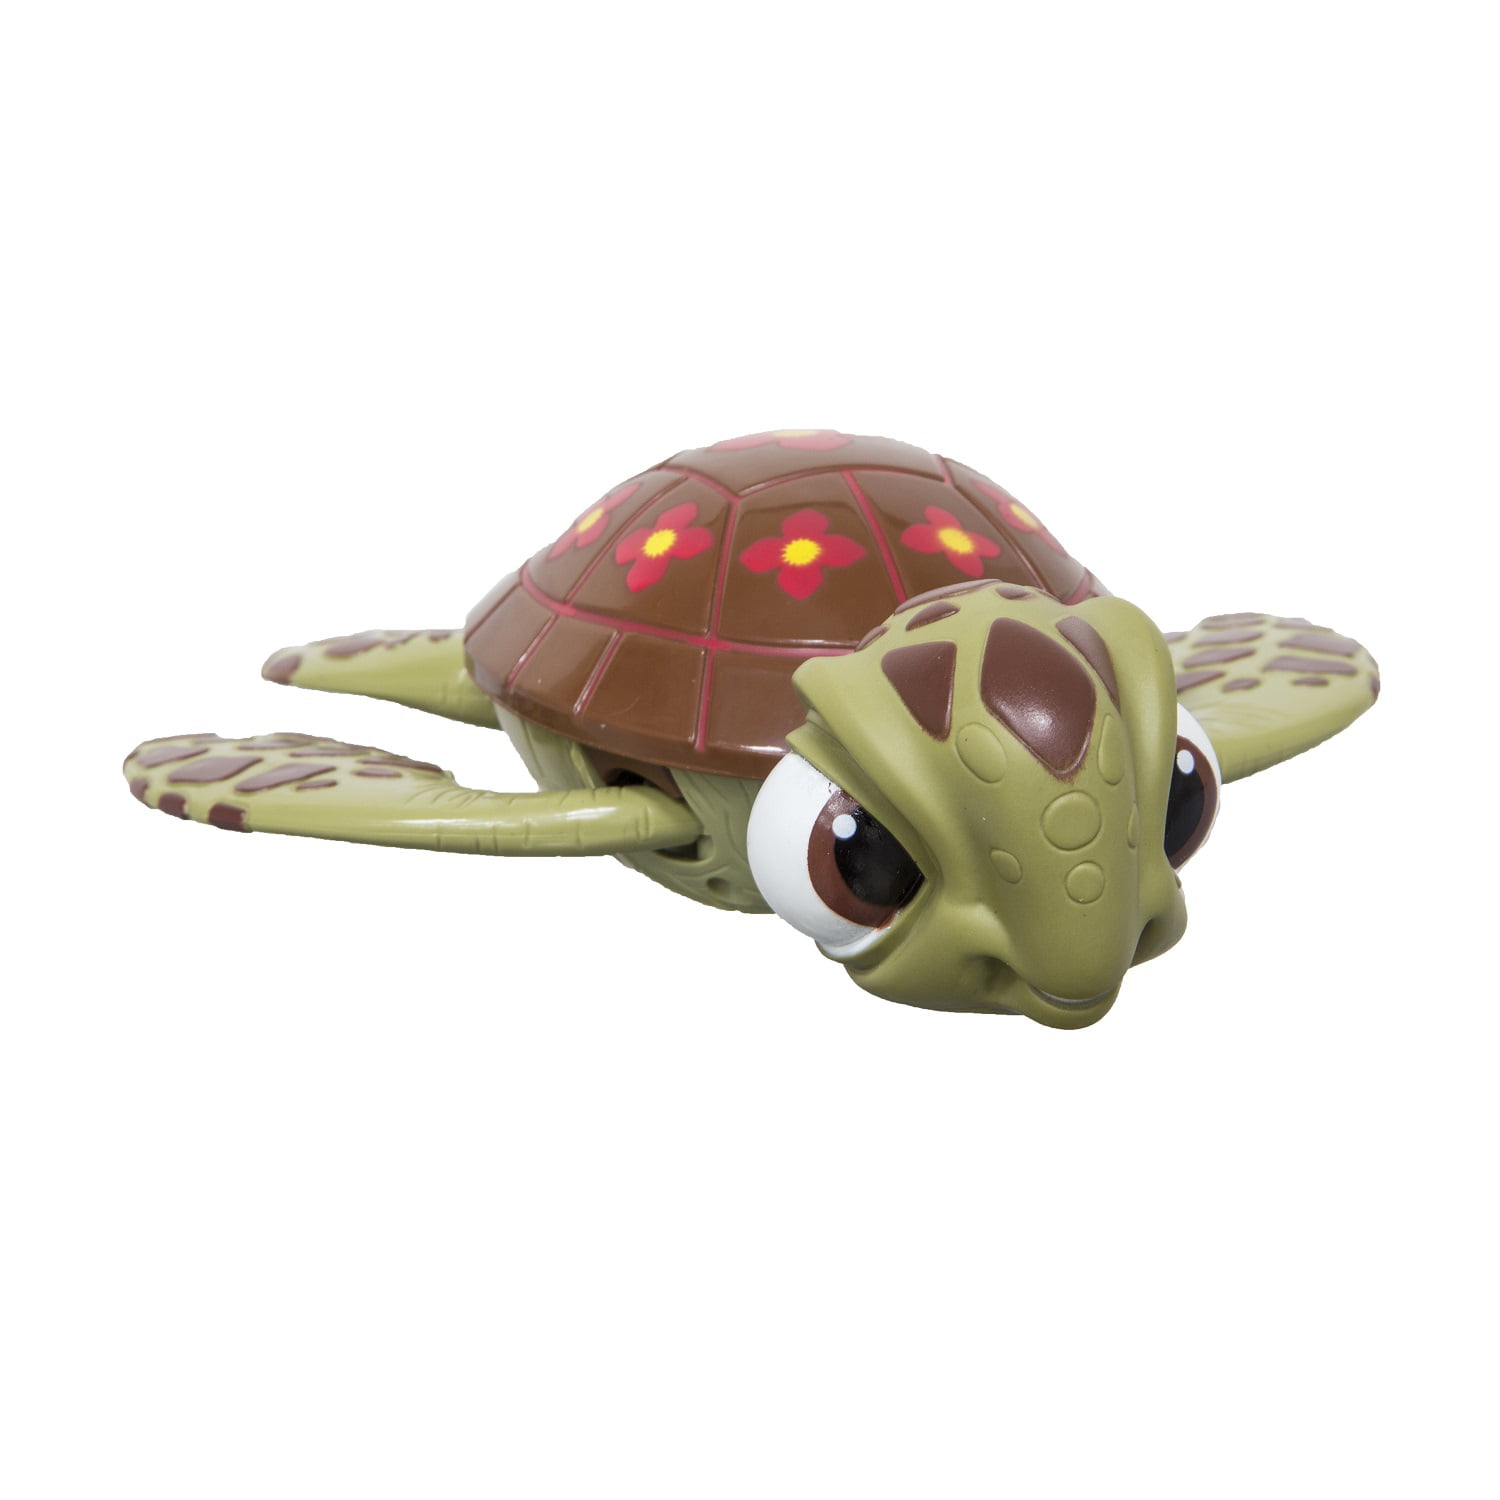 Disney Pixar Finding Nemo Swimways Swimming Mini Pool Toy Turtle 